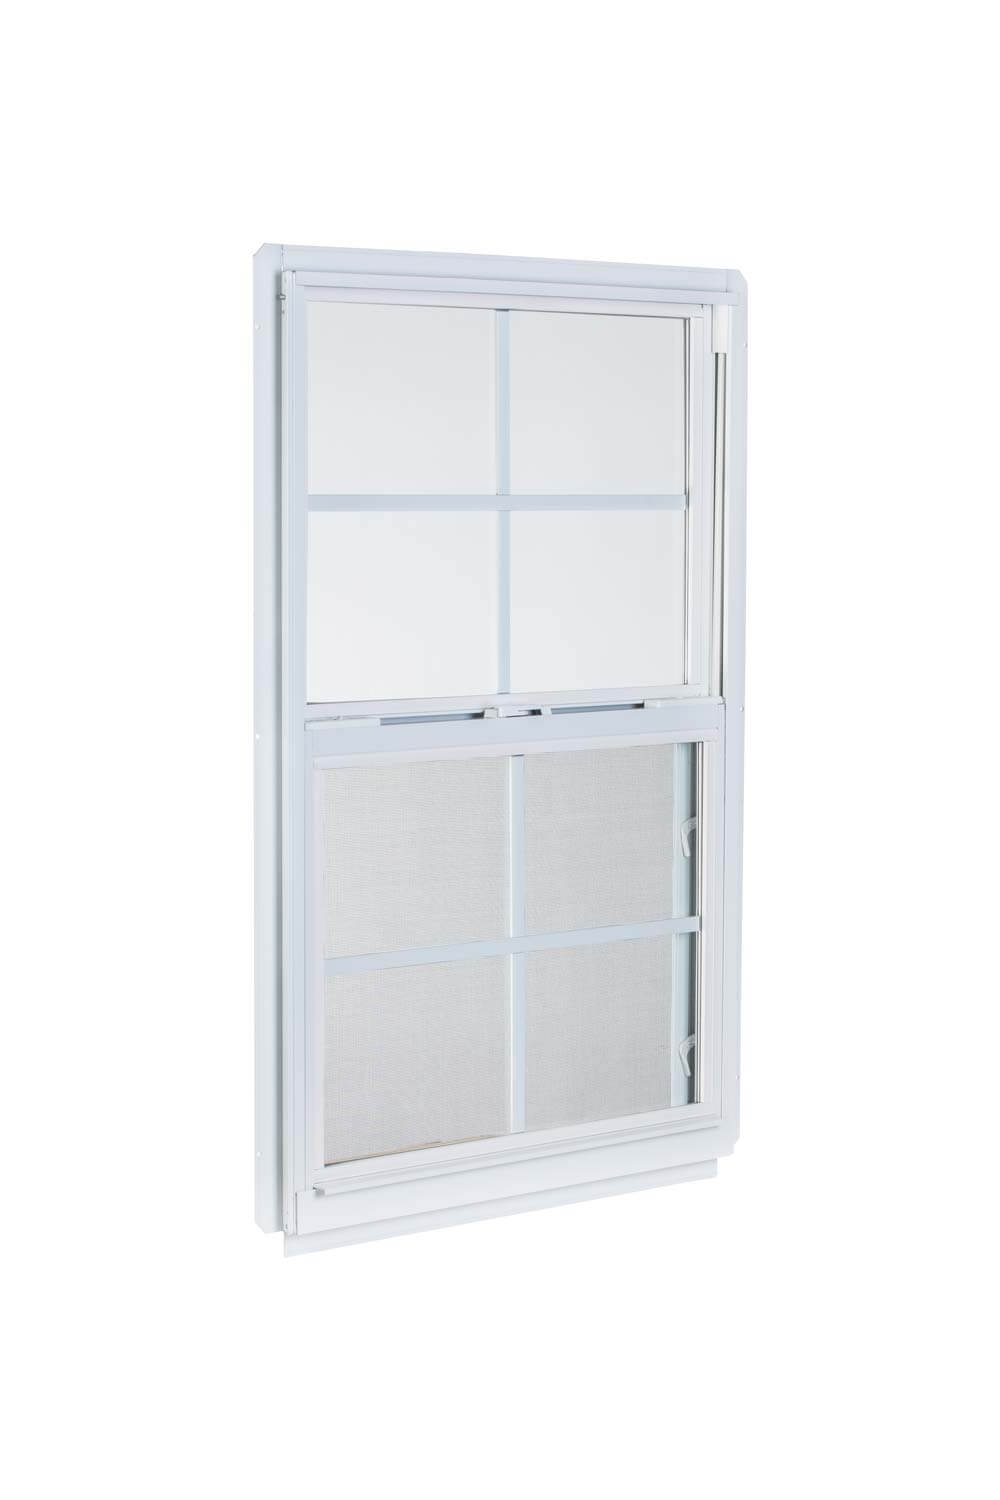 2' x 4'4" Bronze Aluminum Insulated Window (4/4 Window Pane Arrangement) Series 96